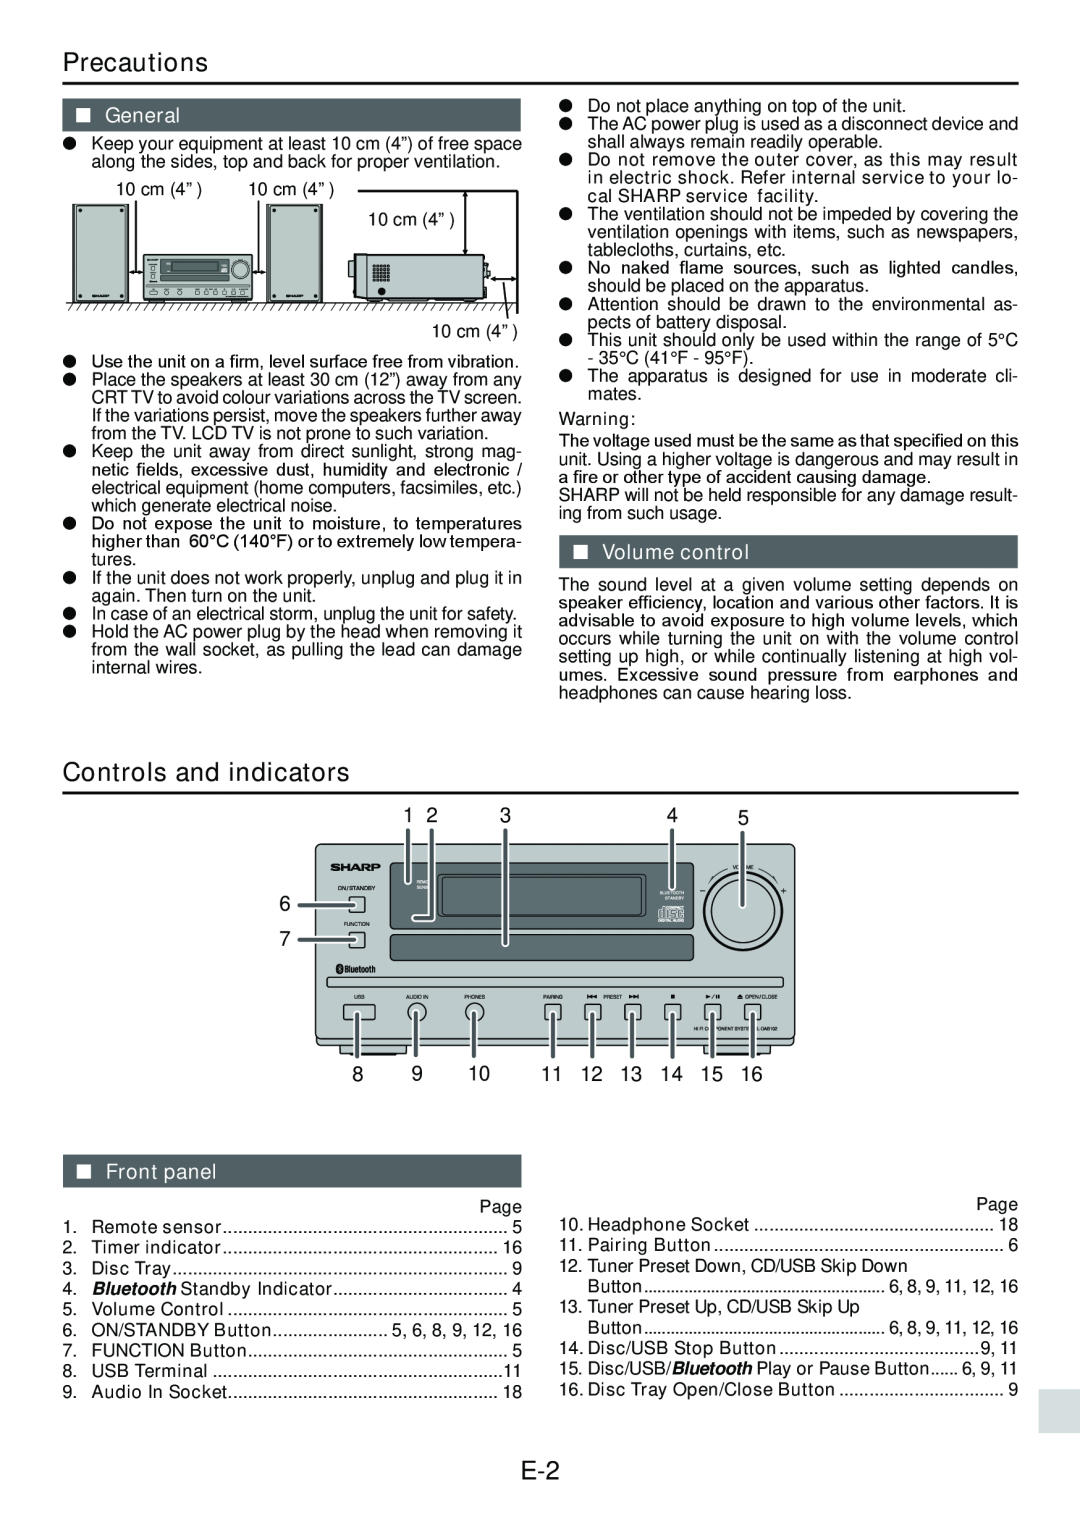 Sharp XL-DAB102DH operation manual Precautions, Controls and indicators, General, Volume control, Front panel, 11 12 13 14 